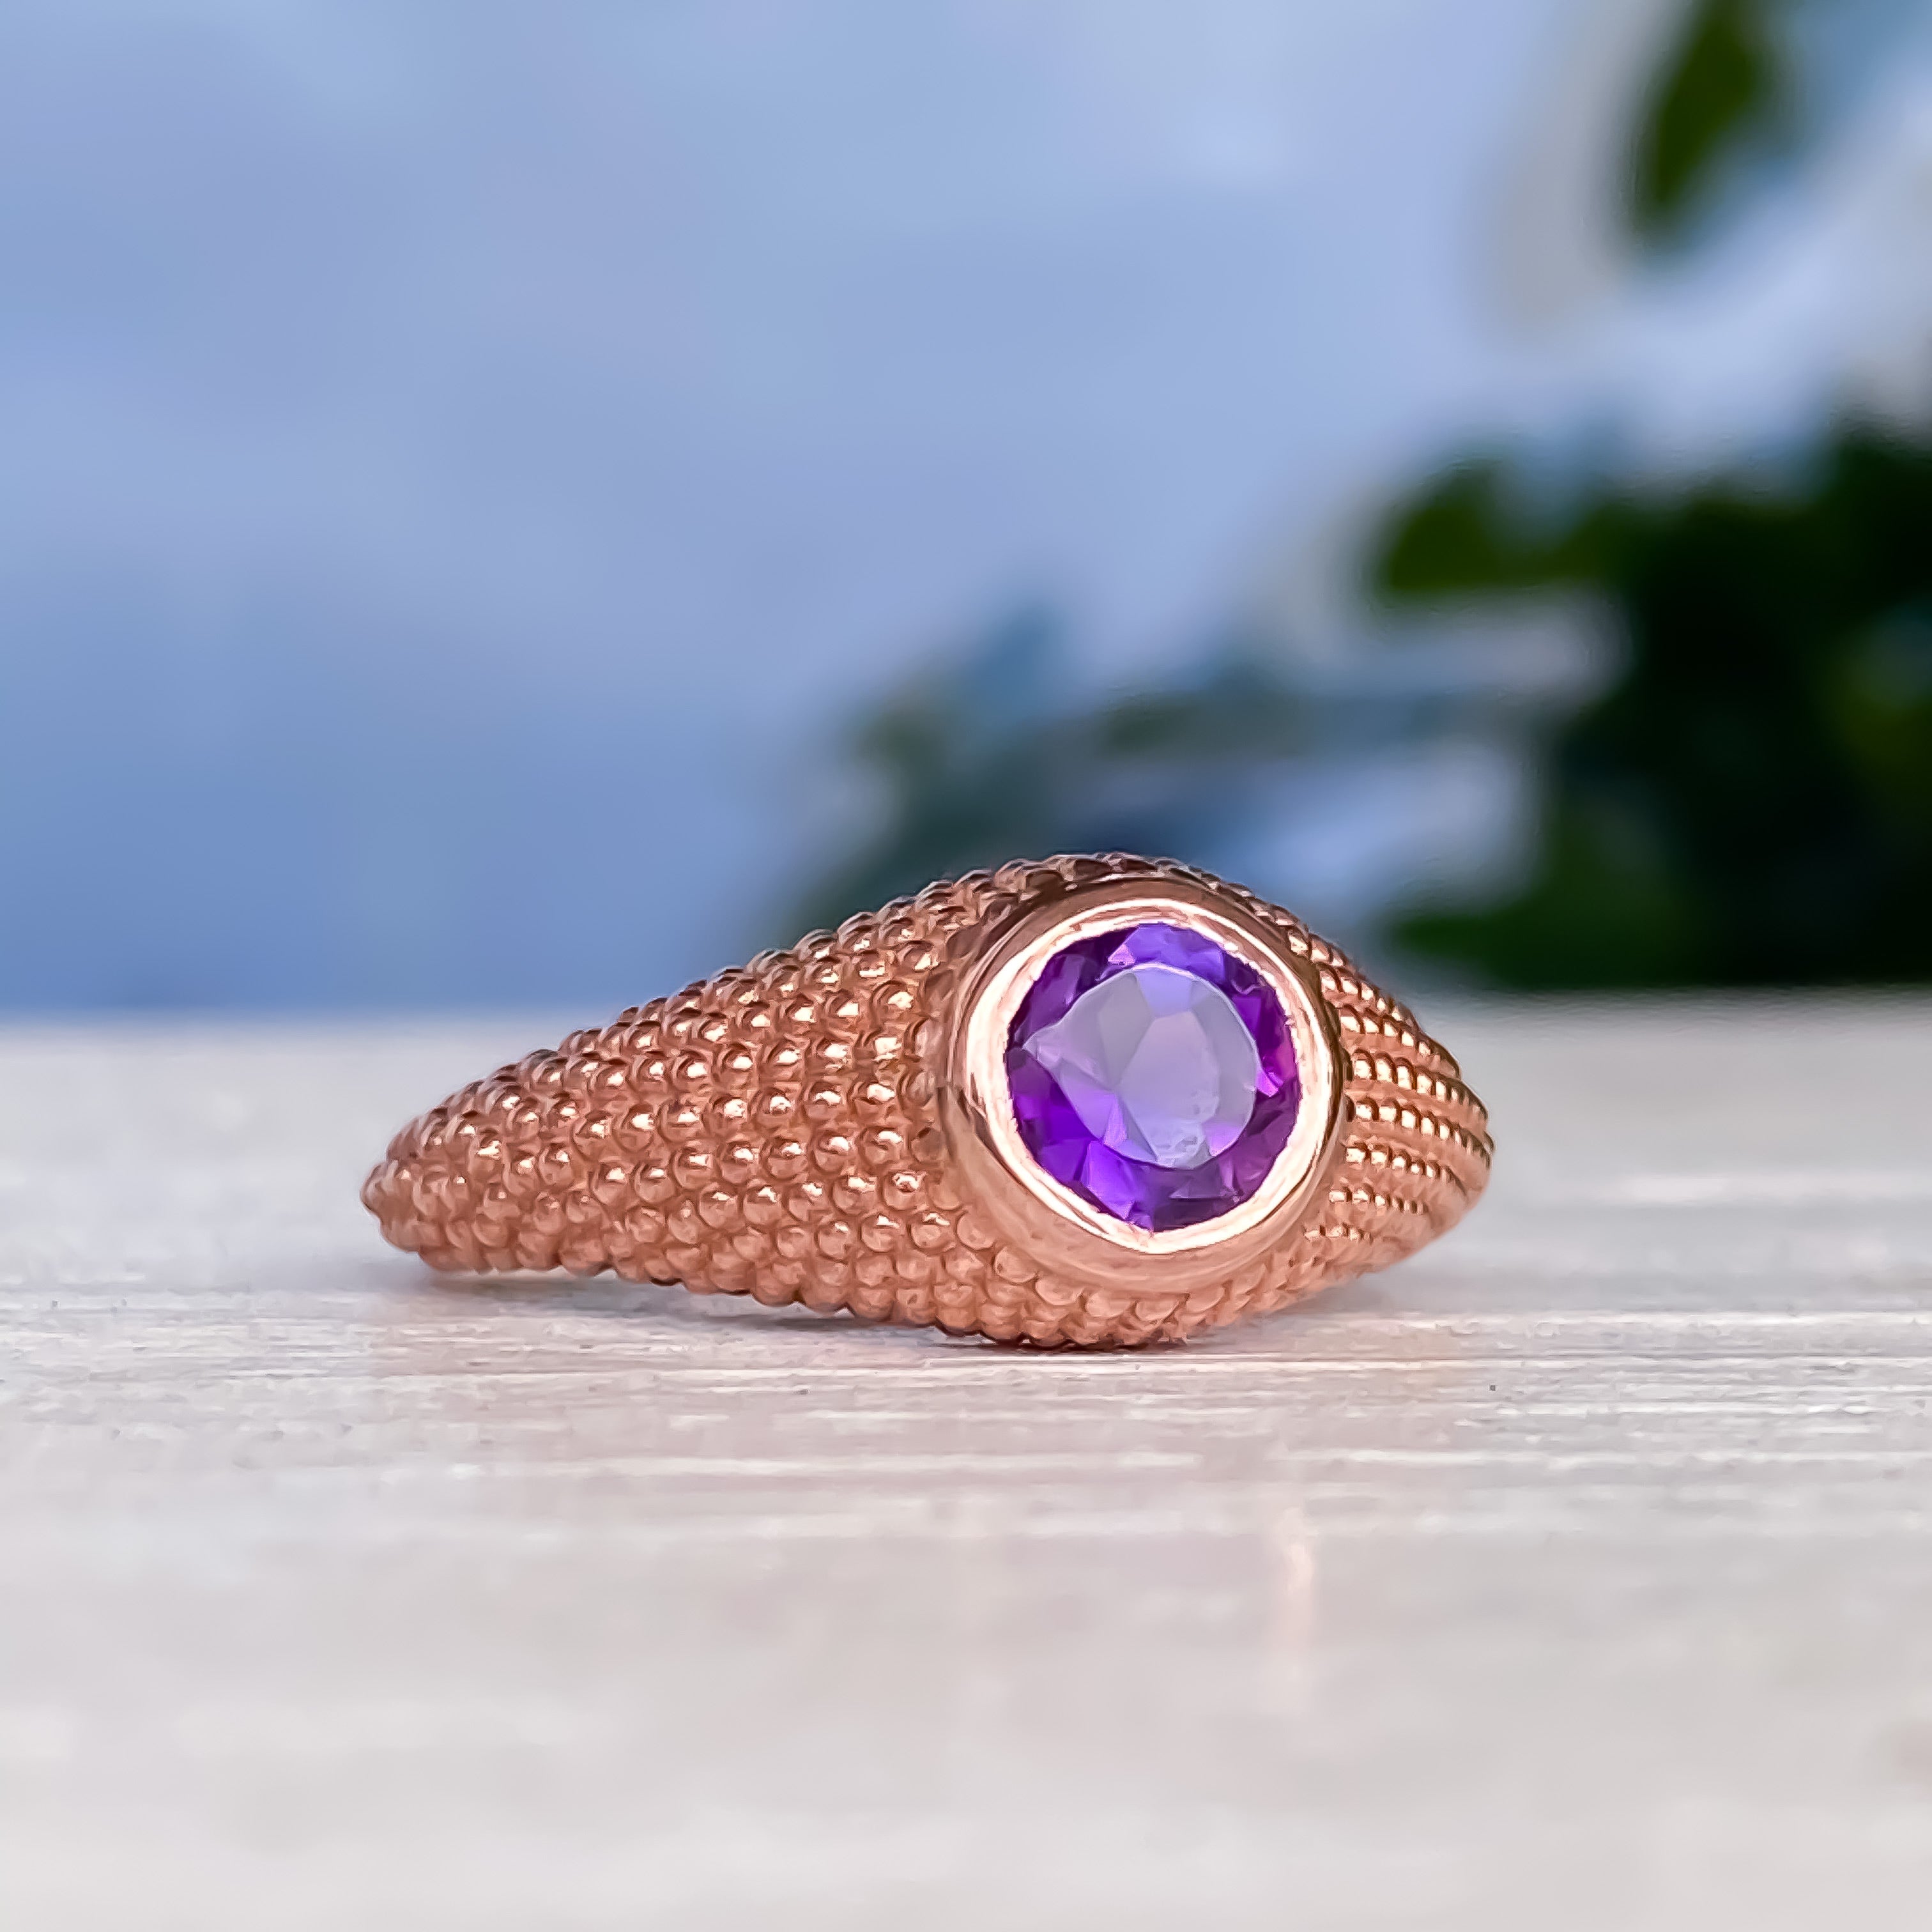 Nubia Round Purple Amethyst Rose Gold Ring Size 7.25US - MANARI.eu